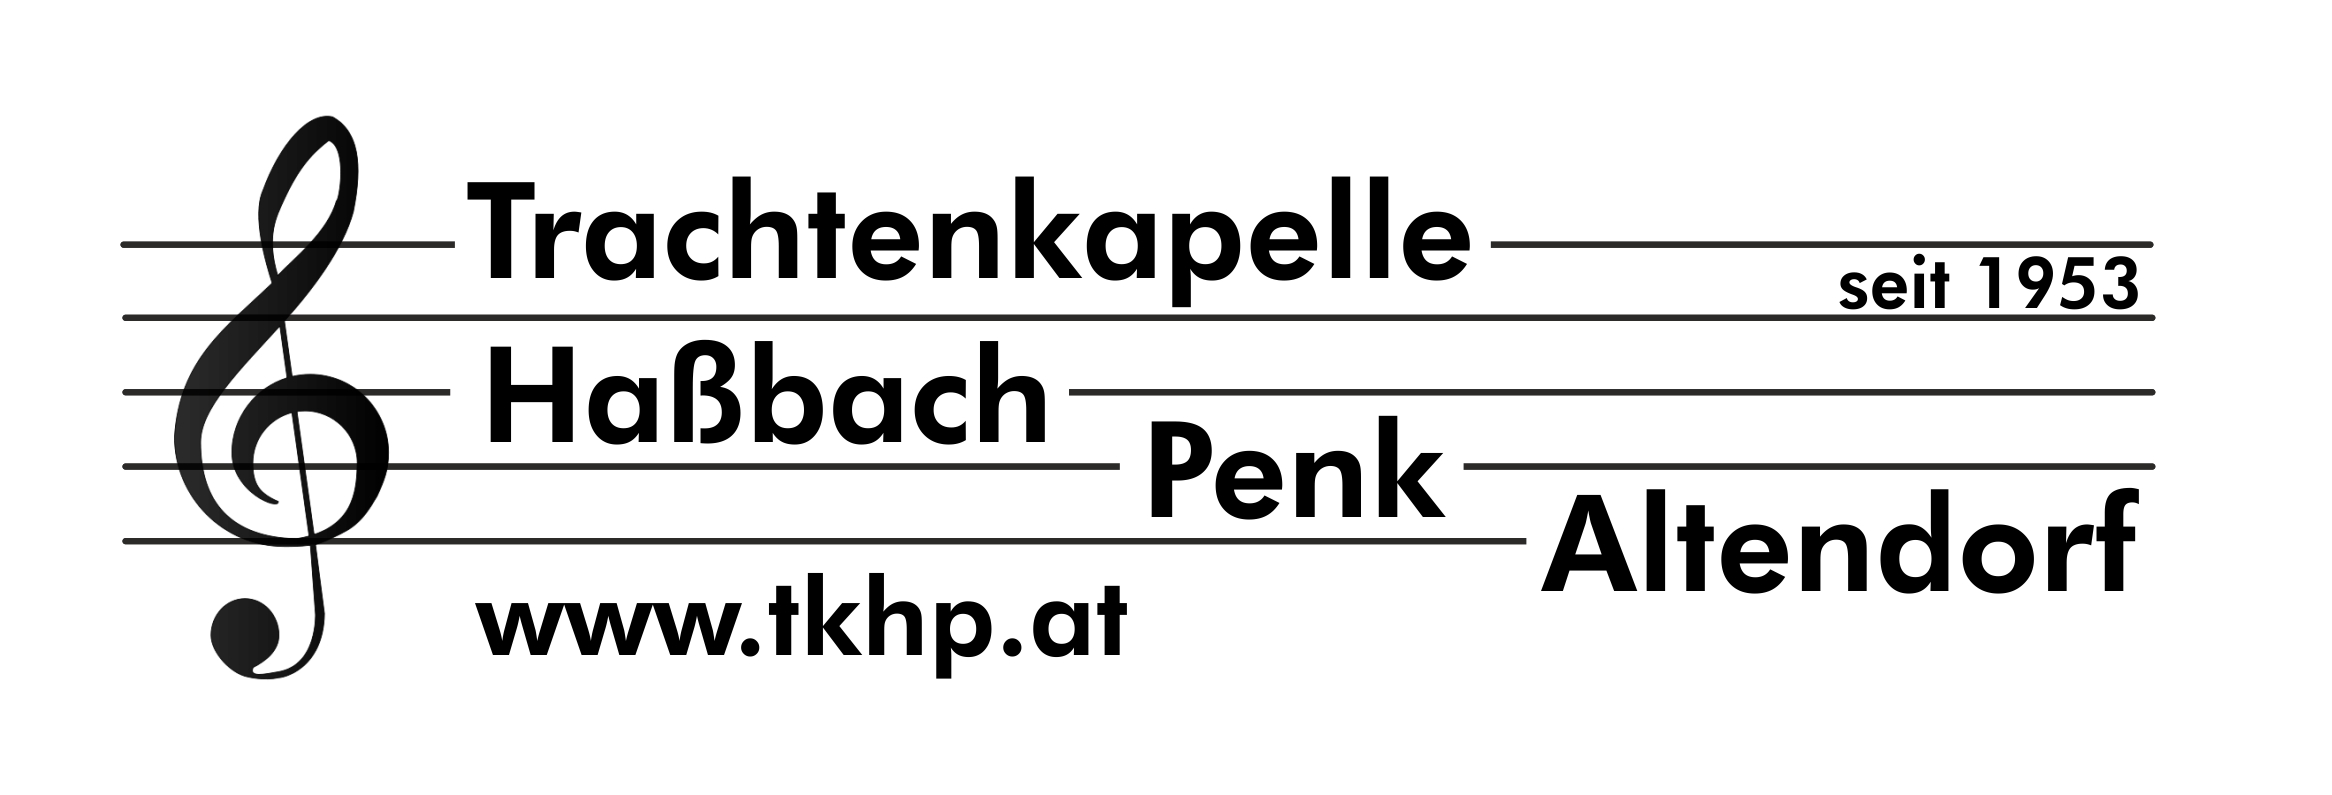 logo-tkhpa